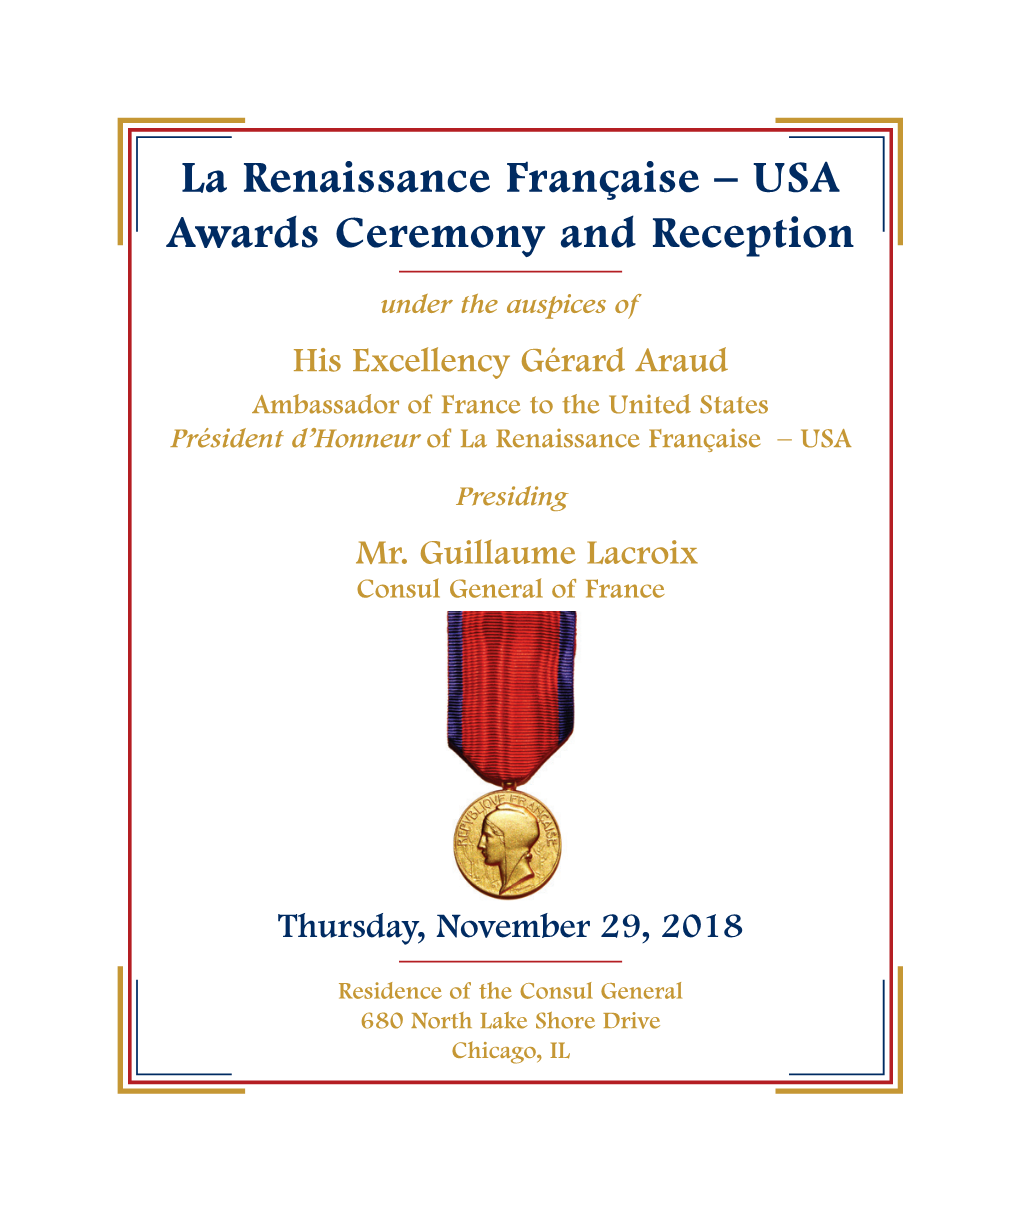 USA Awards Ceremony and Reception